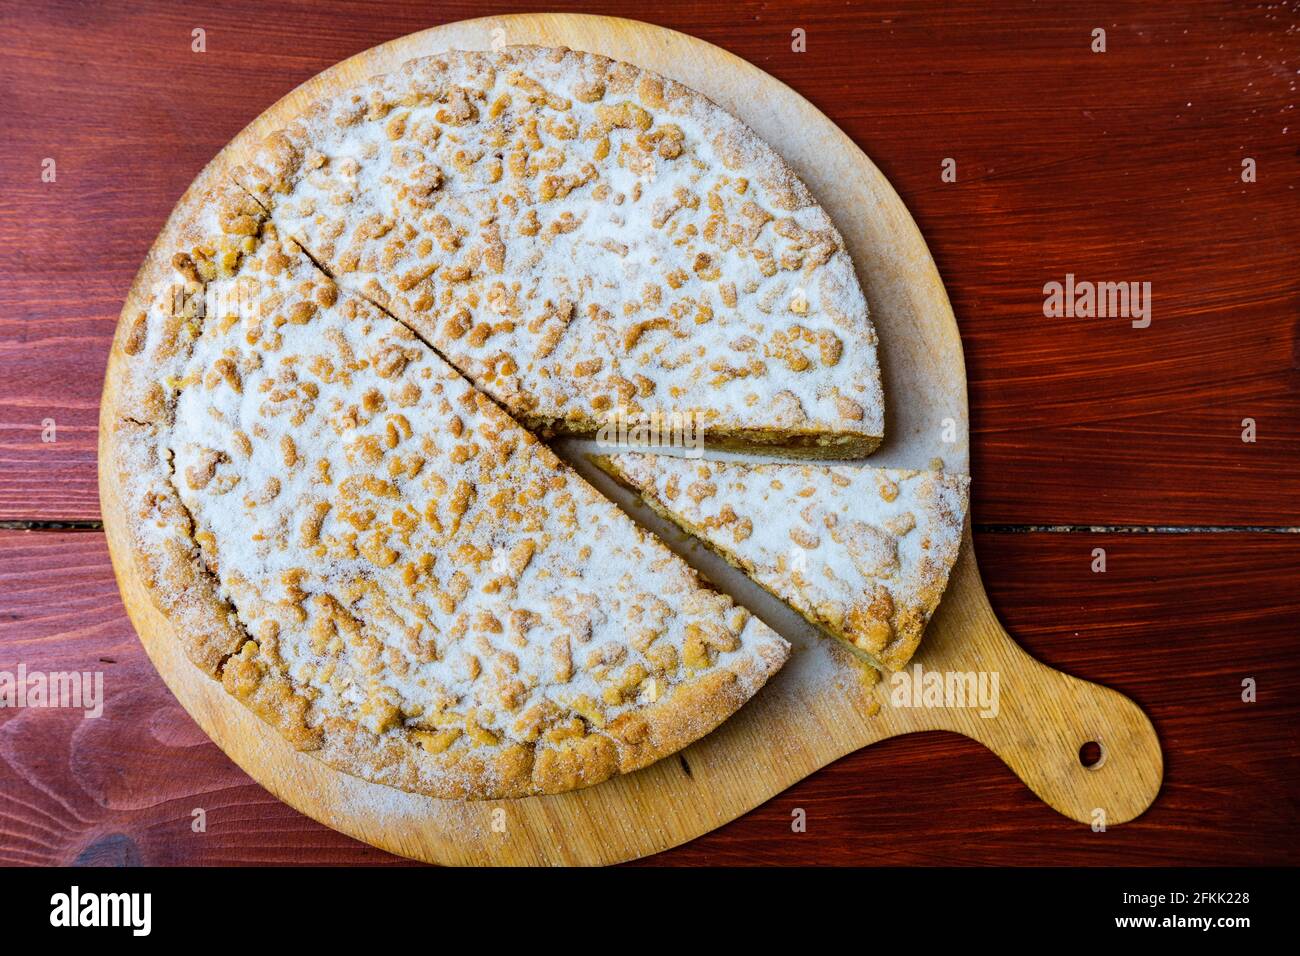 Fresh baked apple pie on wooden table Stock Photo